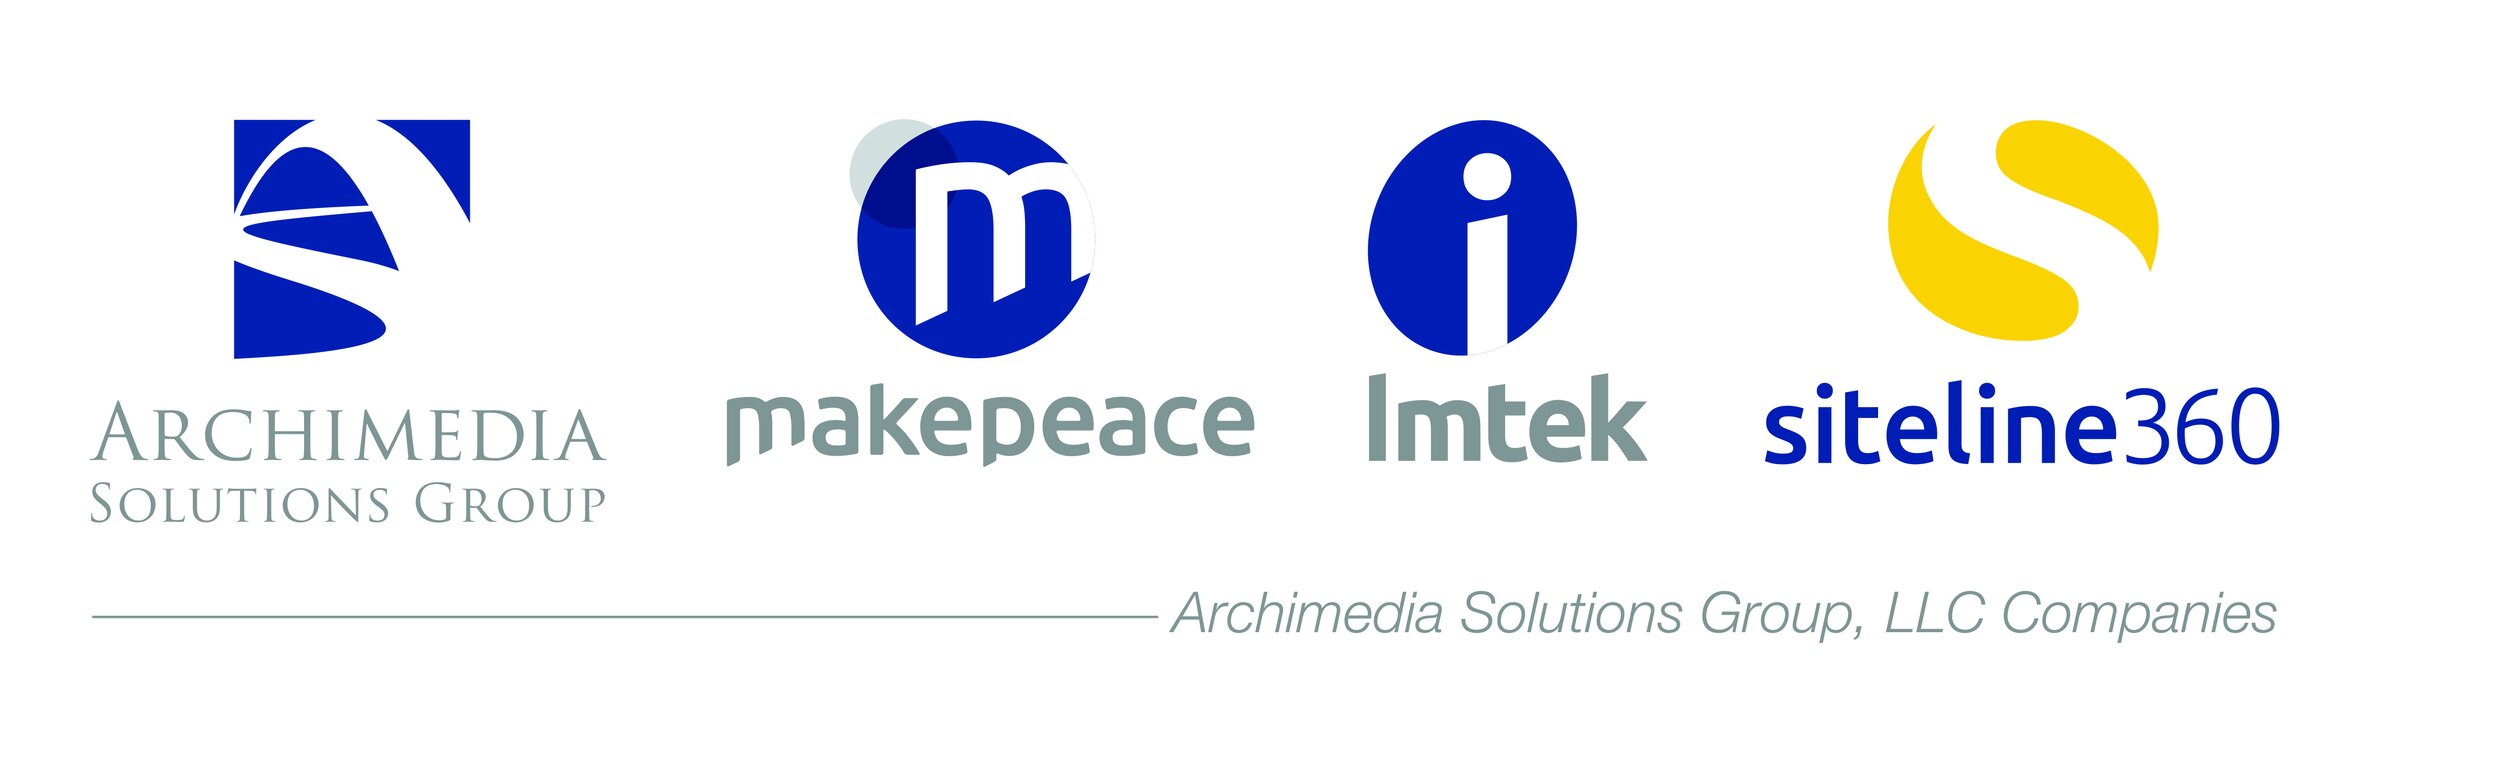 Archimedia Logos.jpg